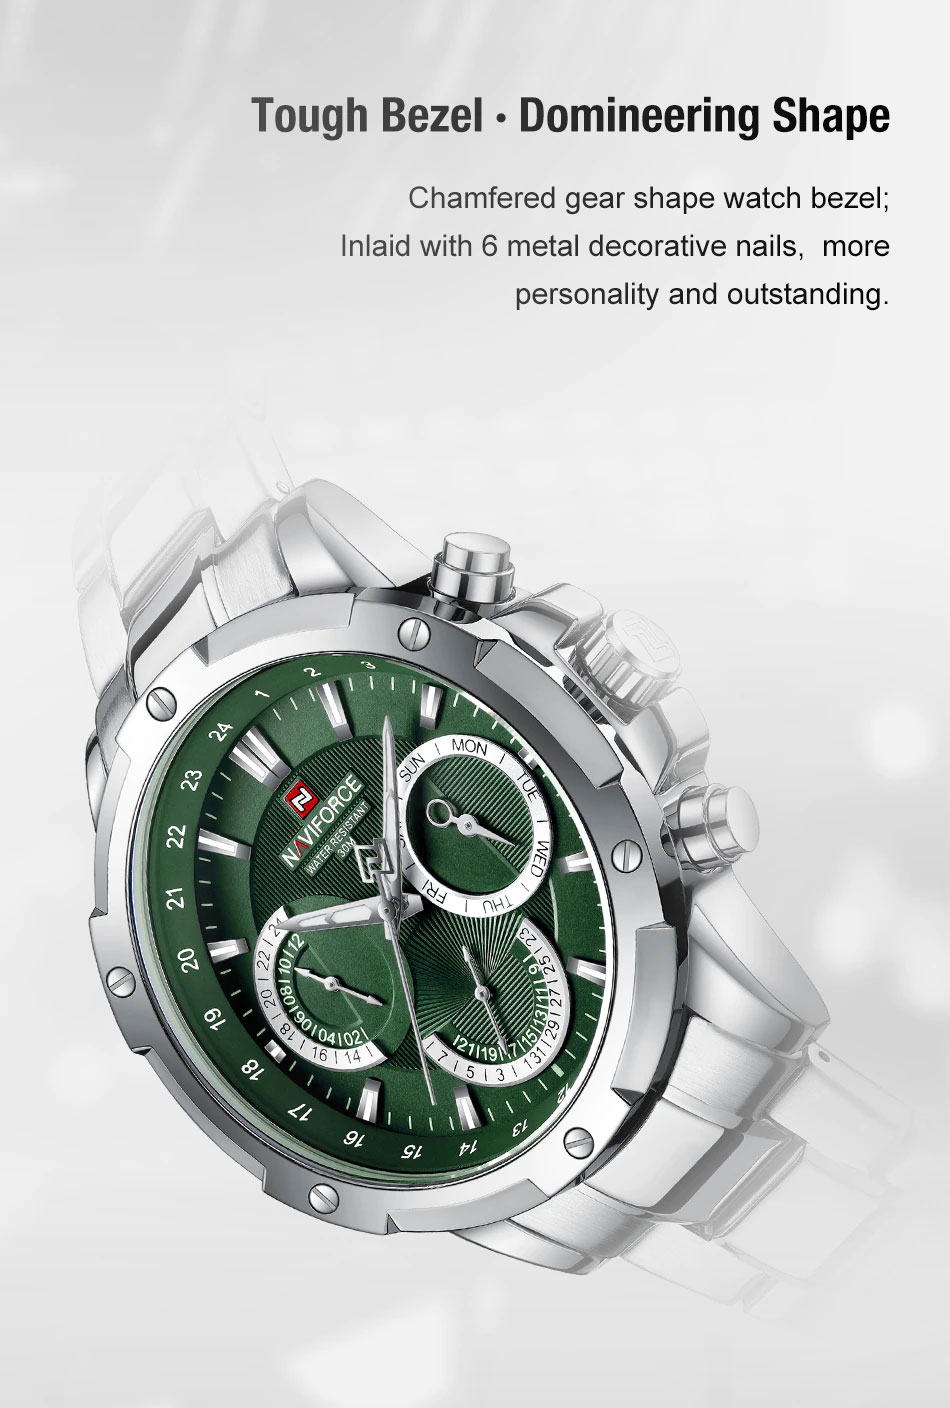 NaviForce-NF9196S men's luxury hand watch in tough bezel domineering shape